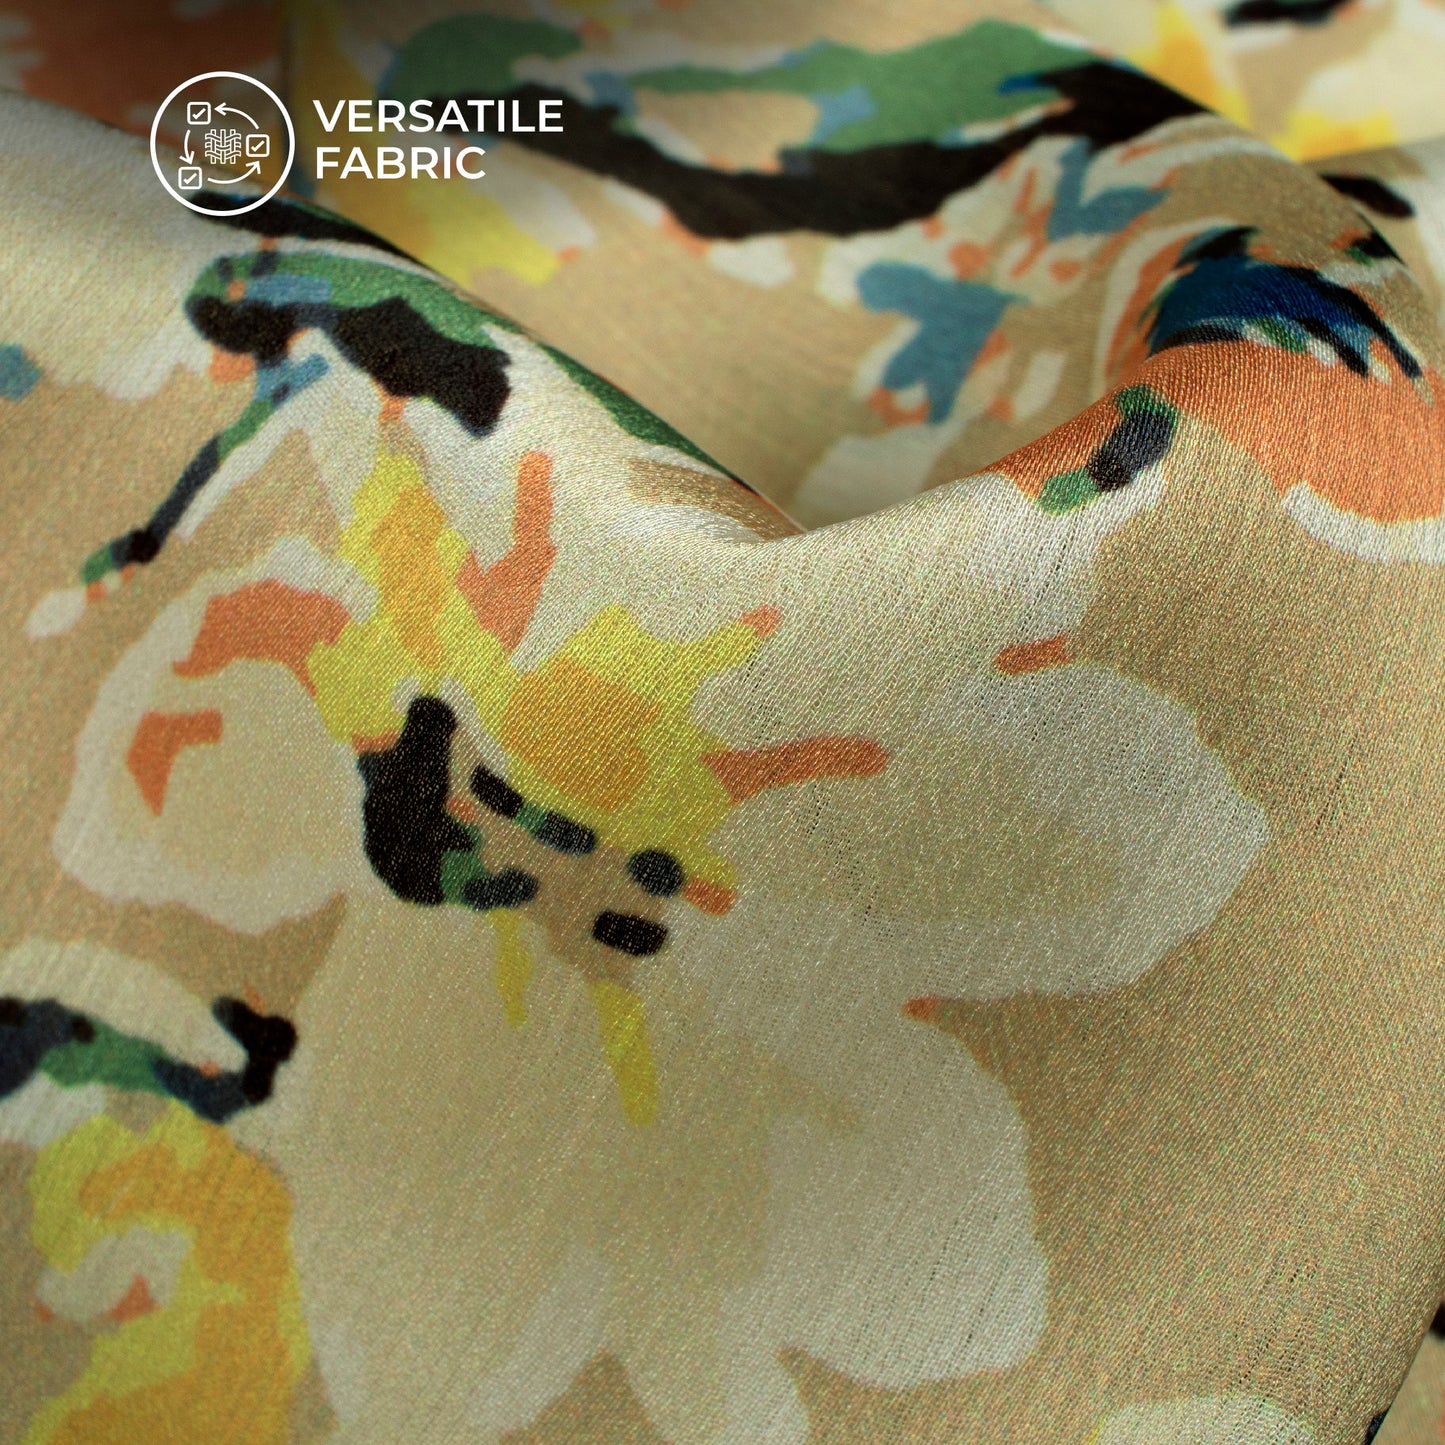 Stunning Floral Digital Print Chiffon Satin Fabric